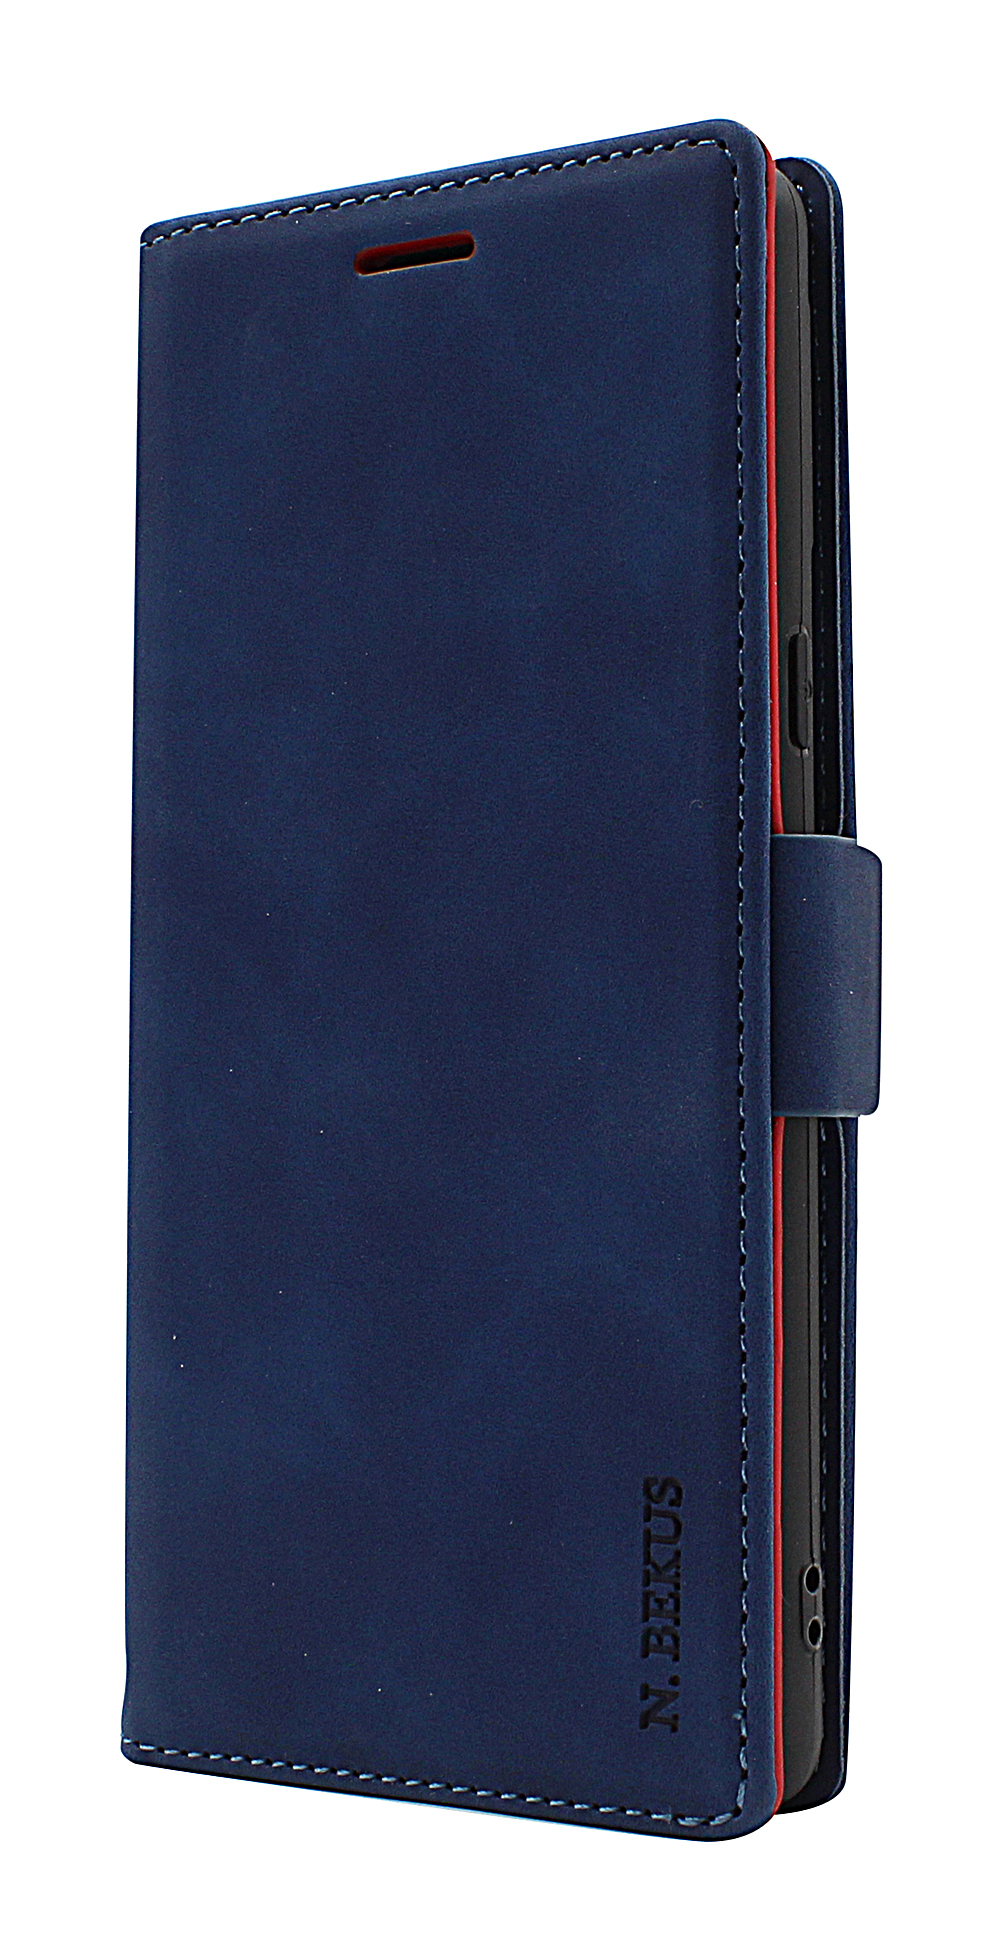 billigamobilskydd.seLyx Standcase Wallet Nokia C22 / C32